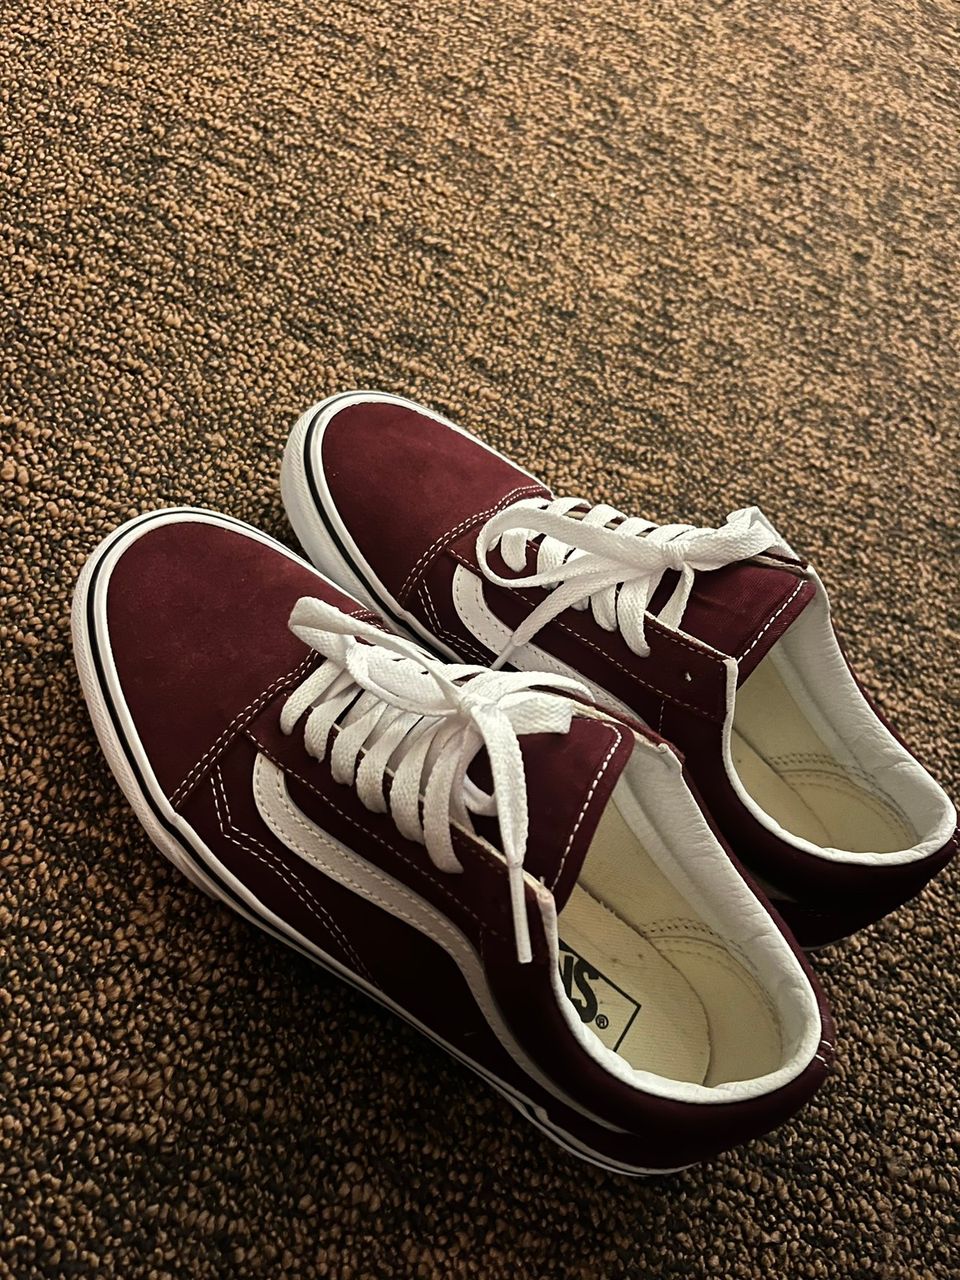 Uudenveroiset Vans-kengät, punainen, 38, old skool